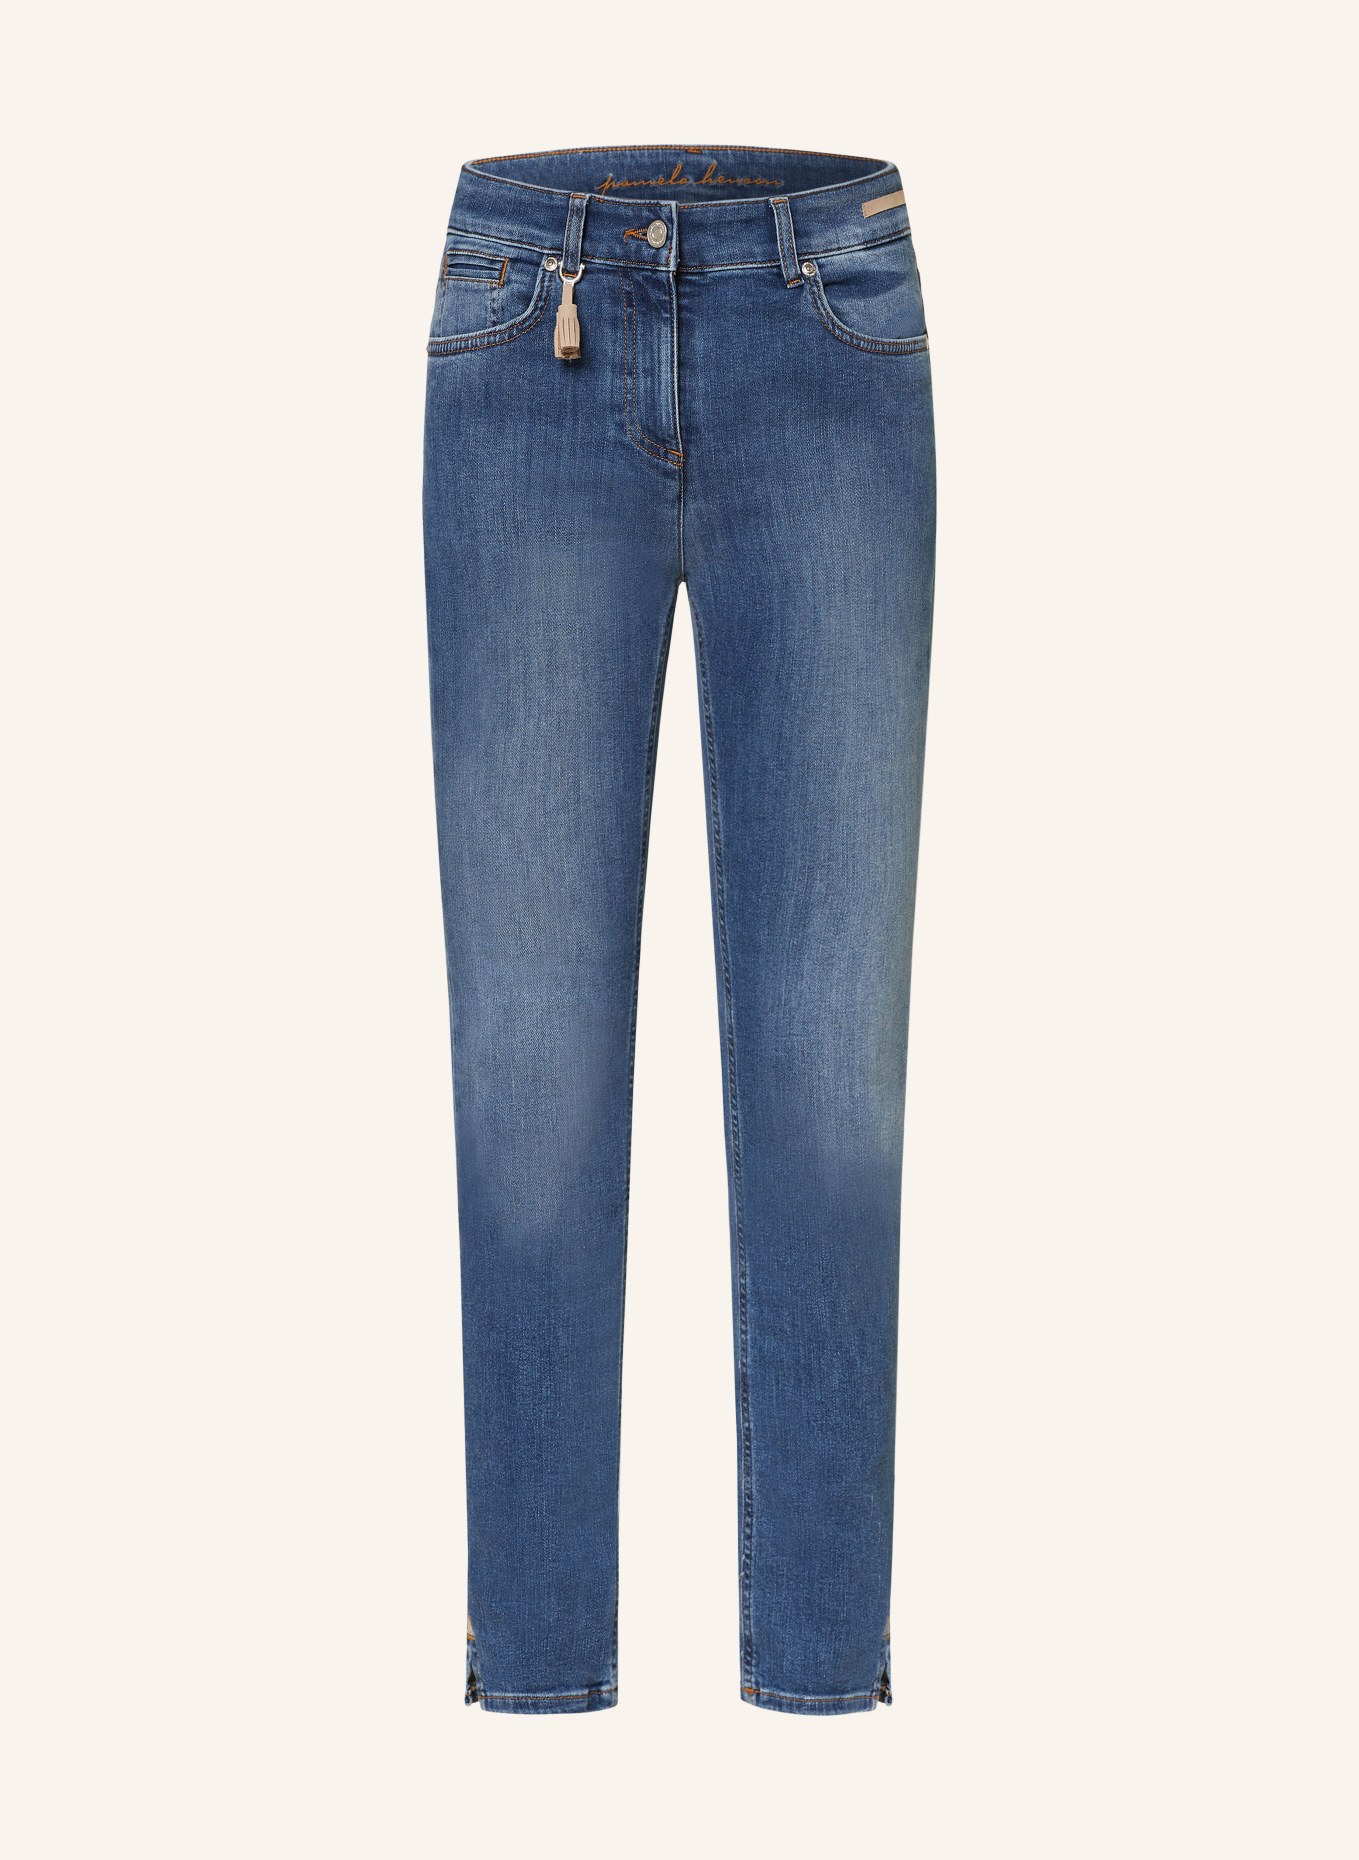 pamela henson Jeans, Farbe: AW1 authentic wash blau denim (Bild 1)